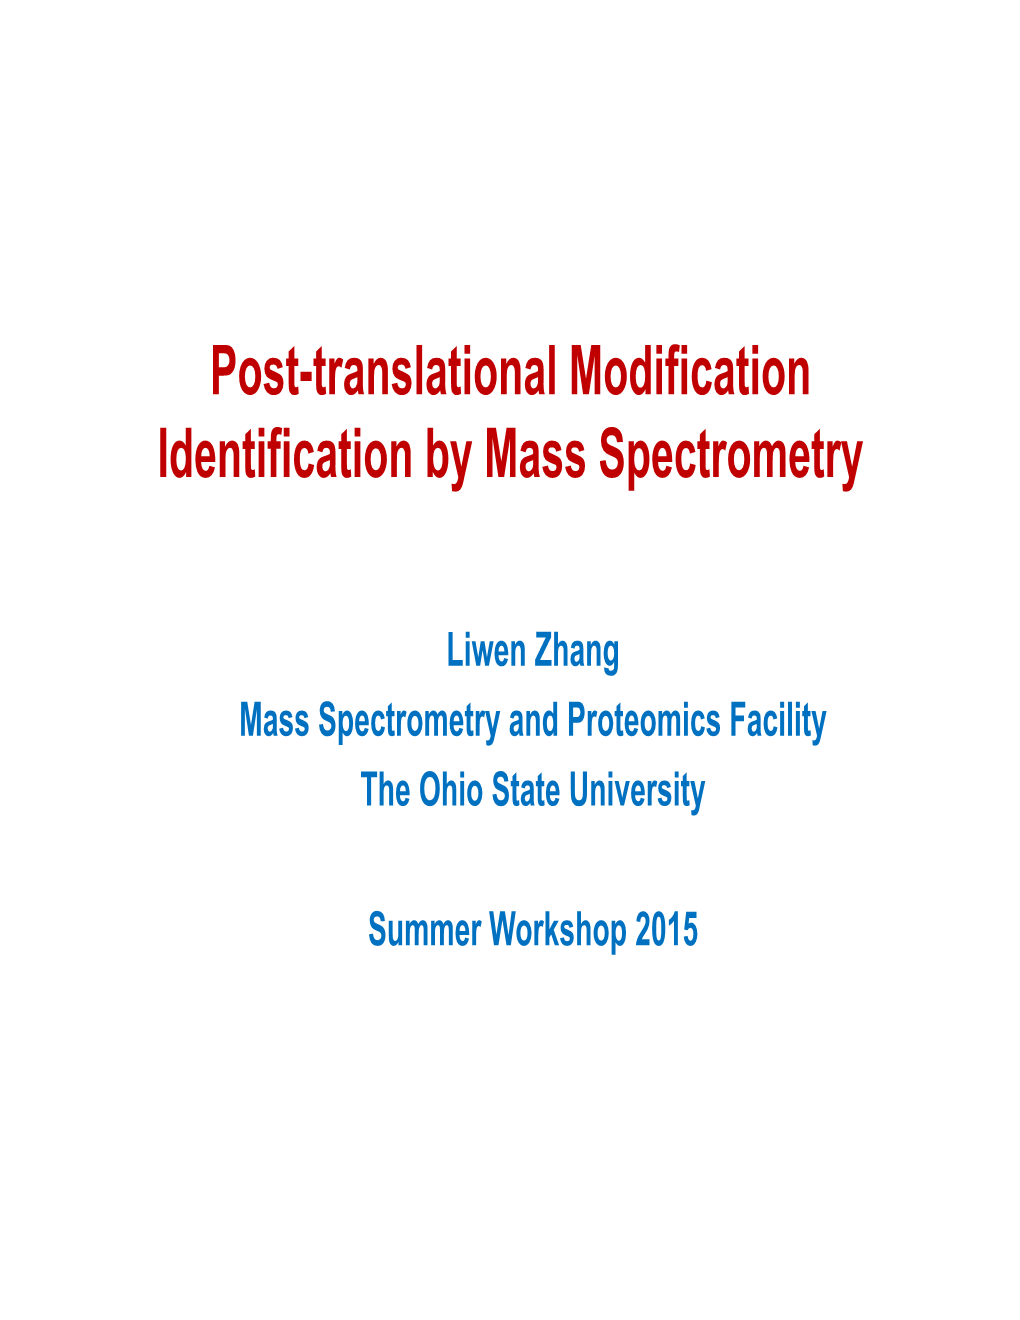 Post-Translational Modification Identification by Mass Spectrometry